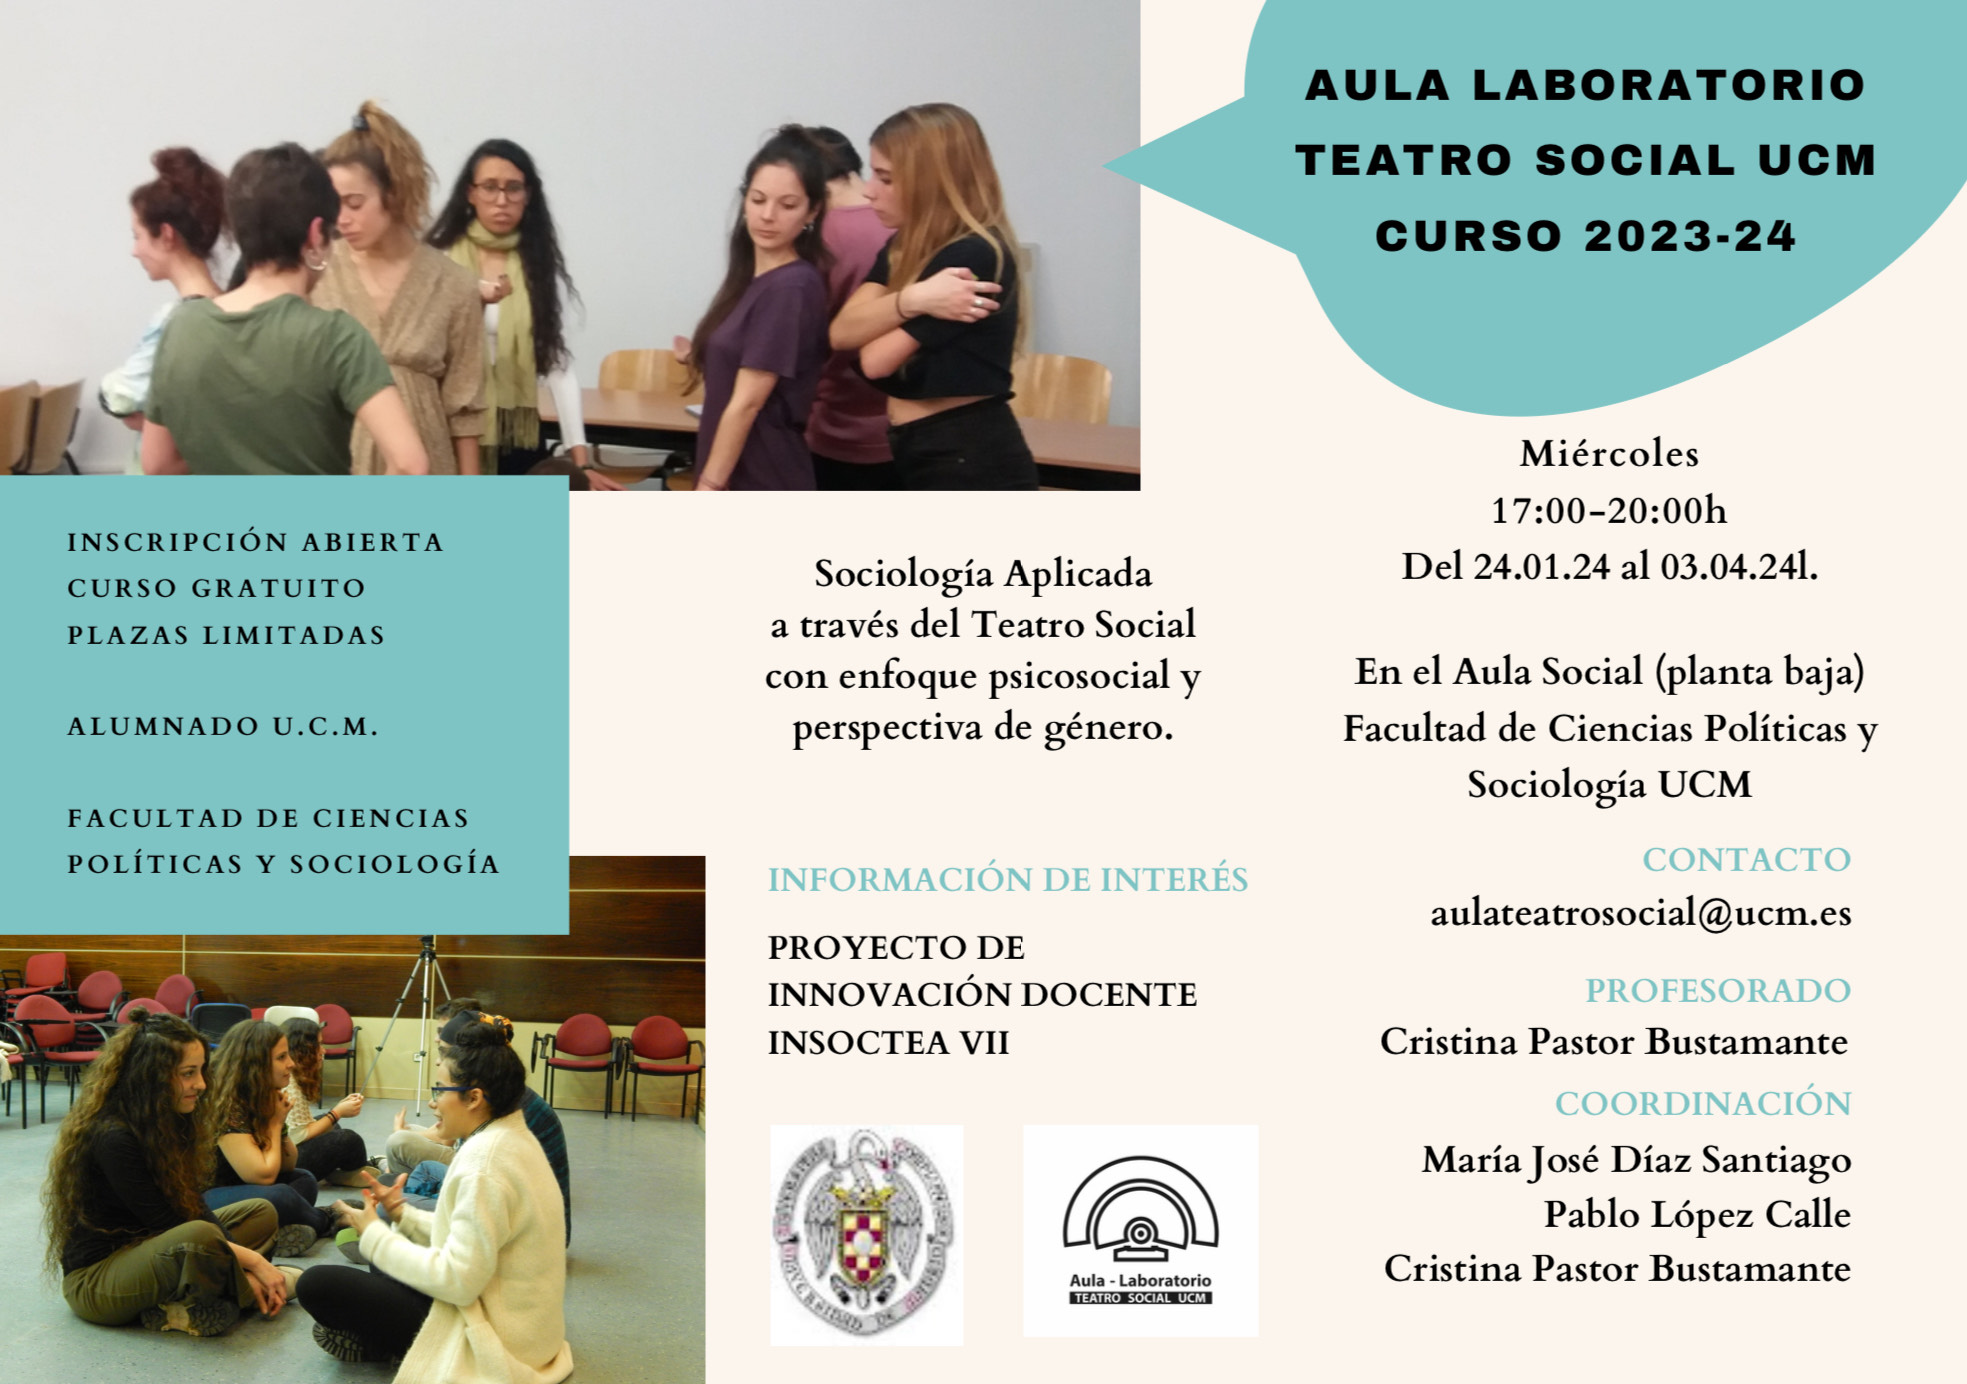 Aula Laboratorio de Teatro Social UCM 2023-24